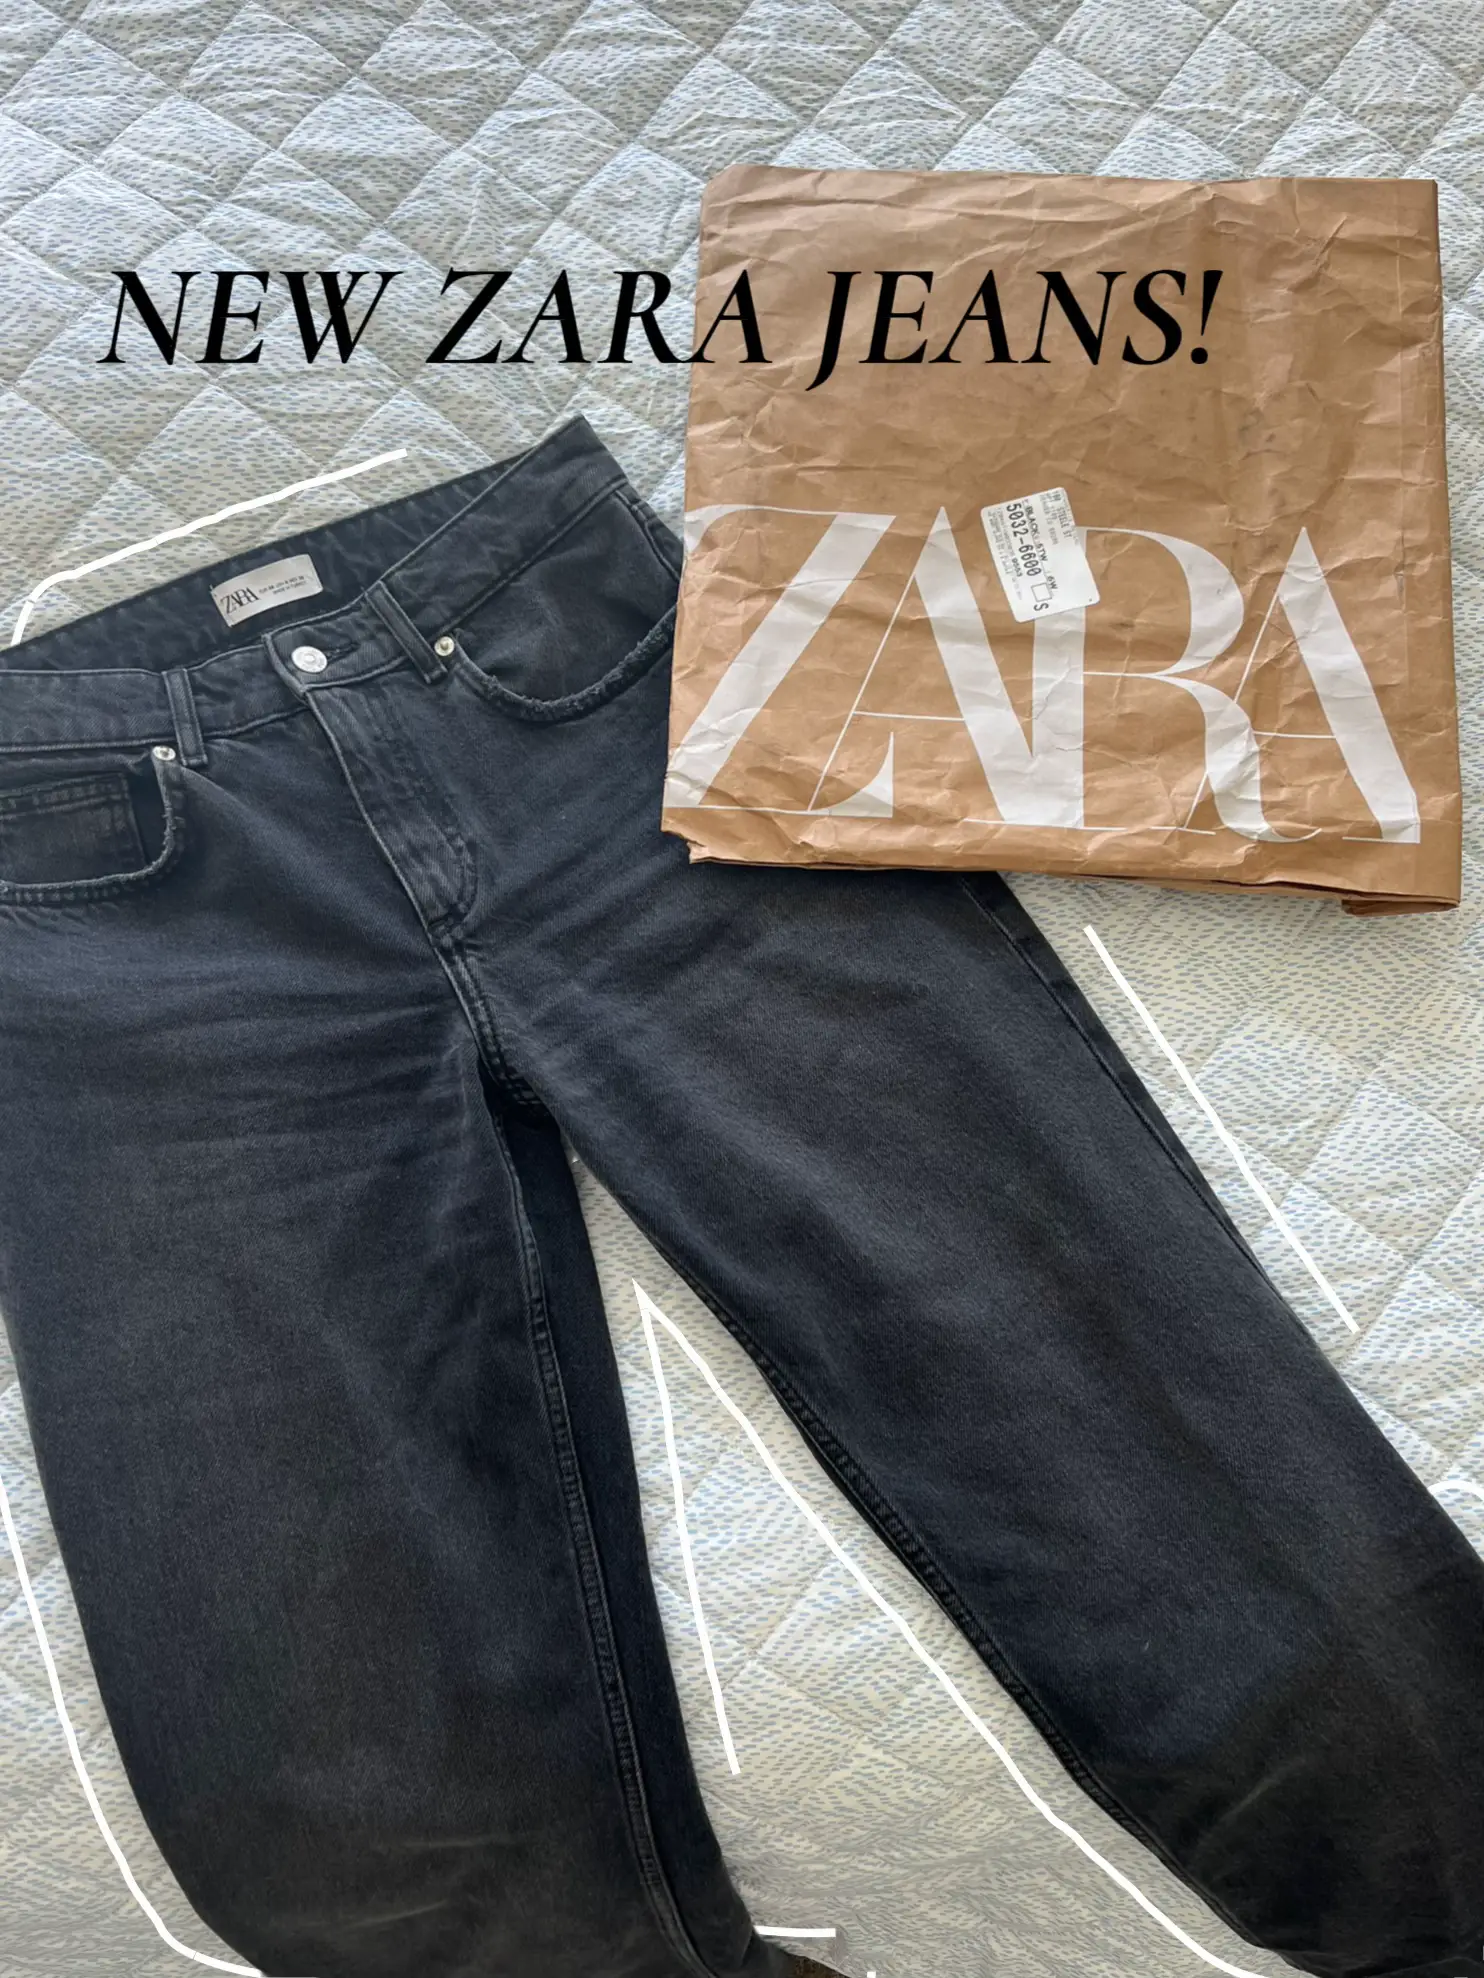 Shop The Zara Jeans That Went Viral On TikTok